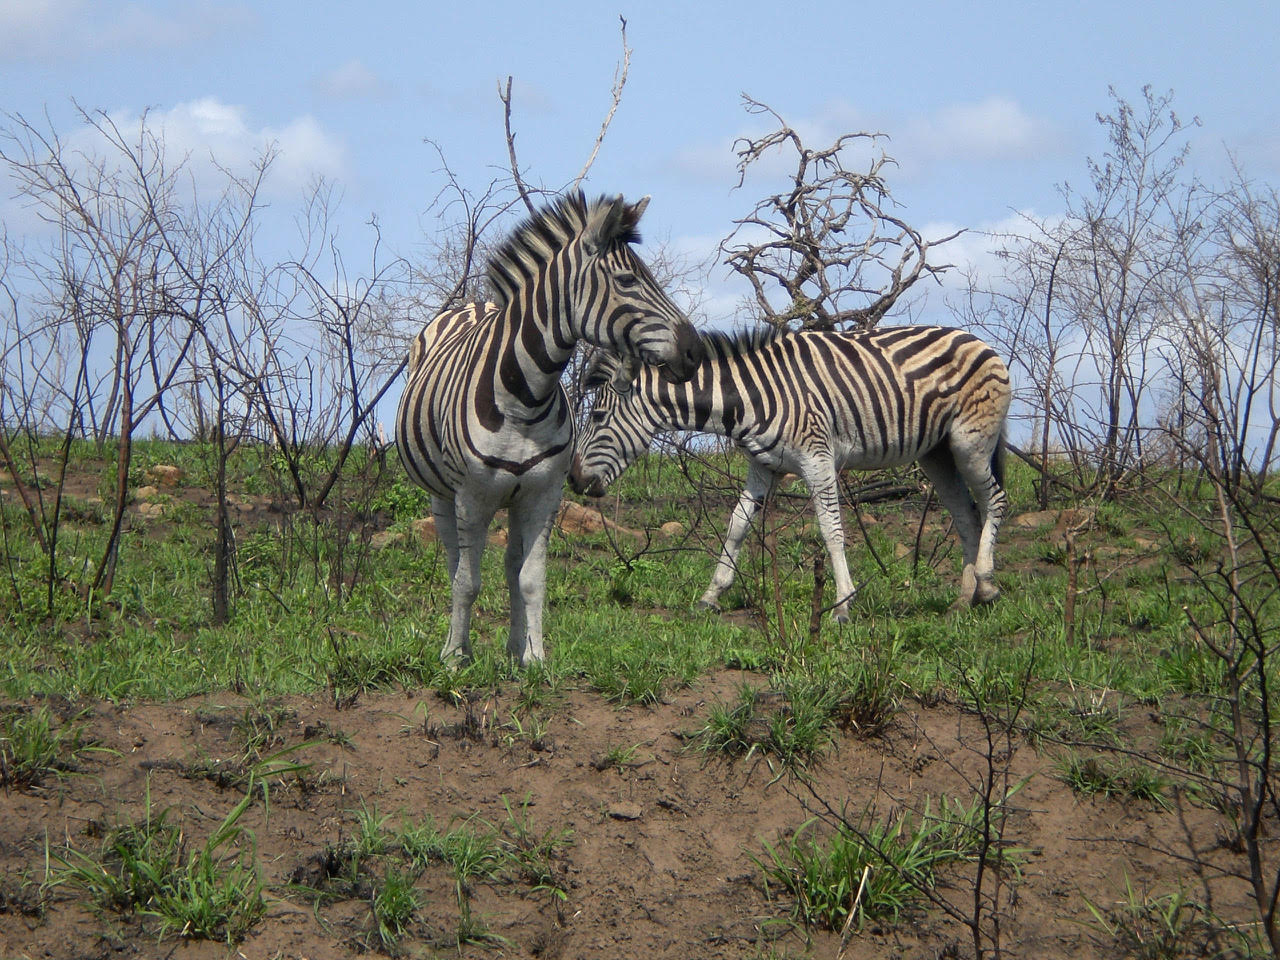 Zebras roaming freely in Kruger National Park, African Safari destination, Safari in Africa, Trip to African Safari